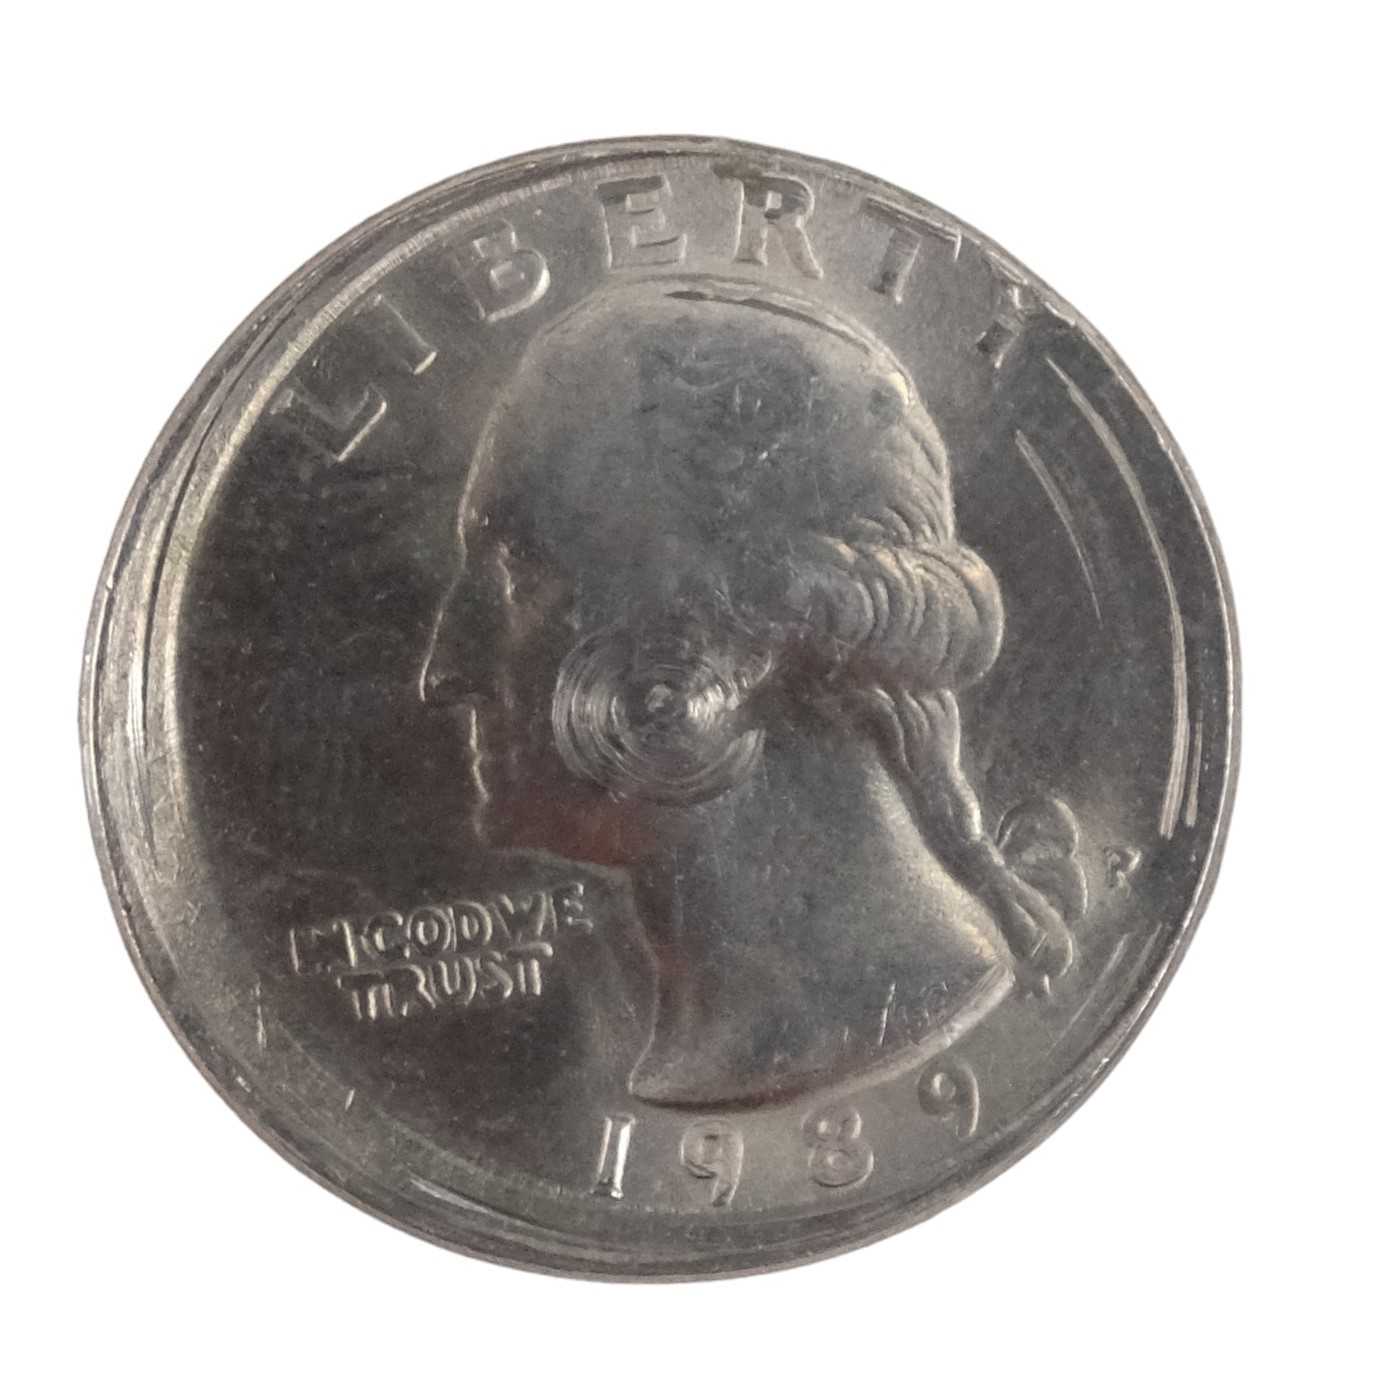 A 1989 US Broadstrike error quarter coin, Philadelphia Mint mark